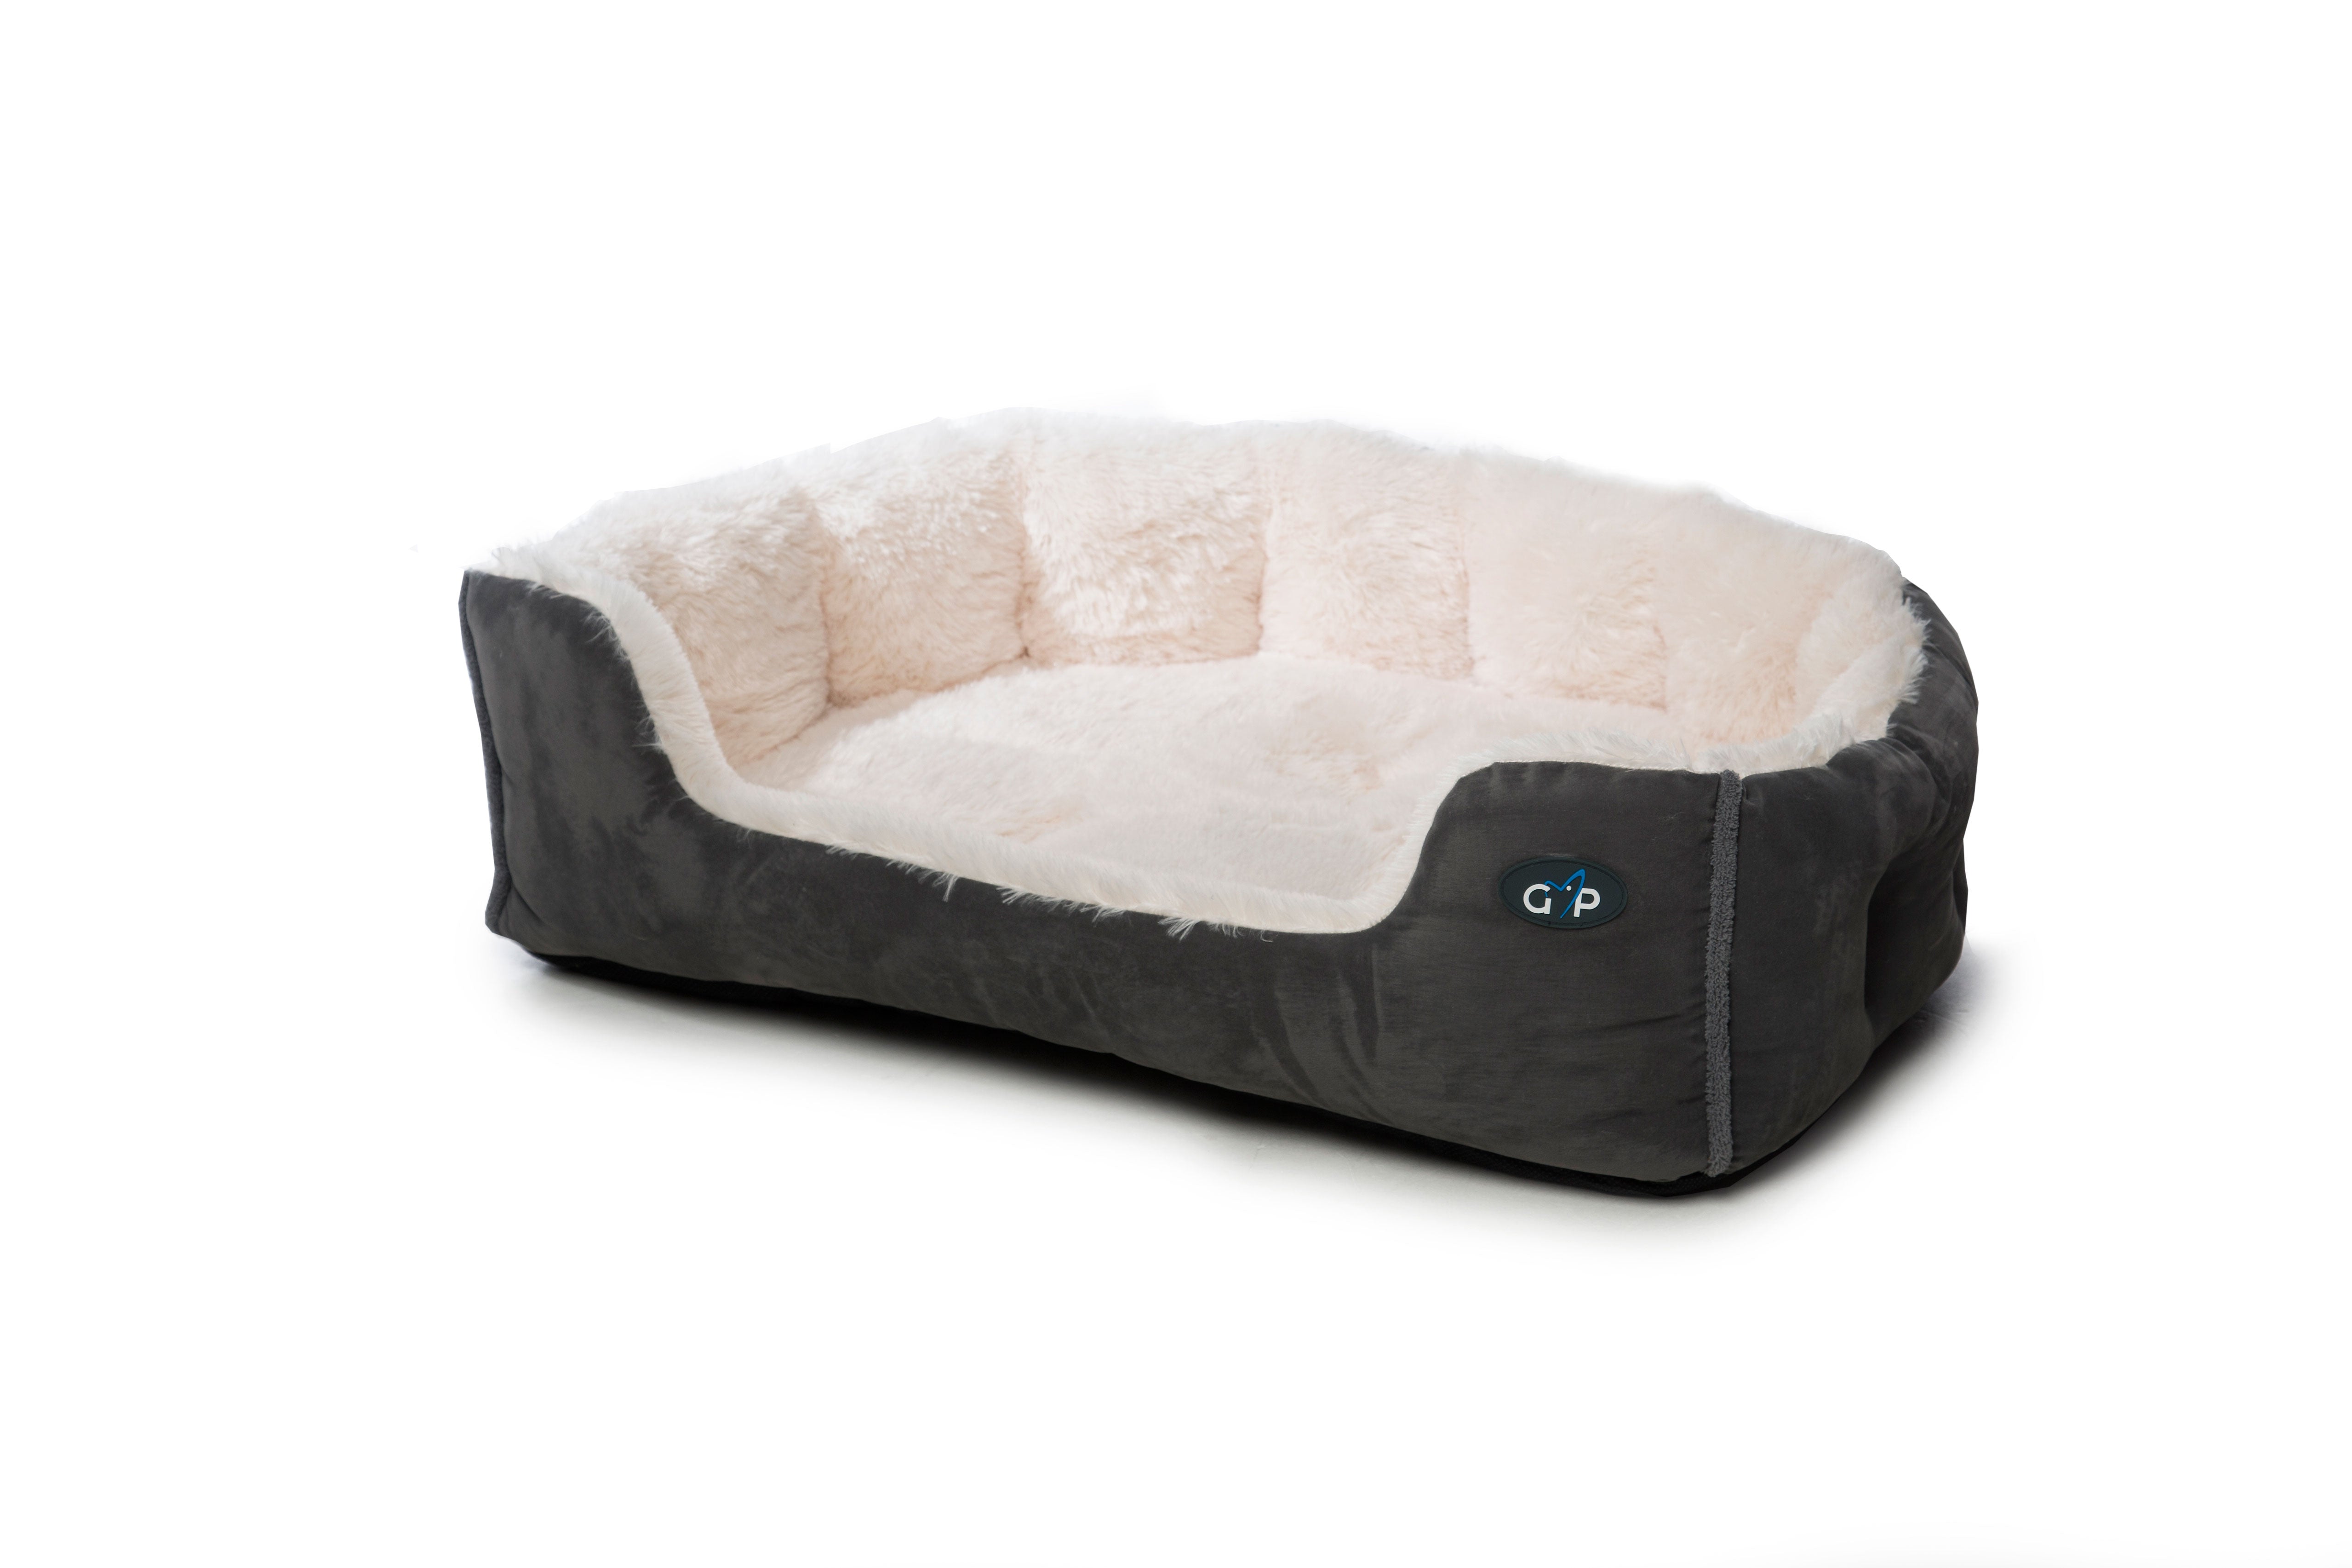 Nordic Snuggle Bed 70cm (28") Grey